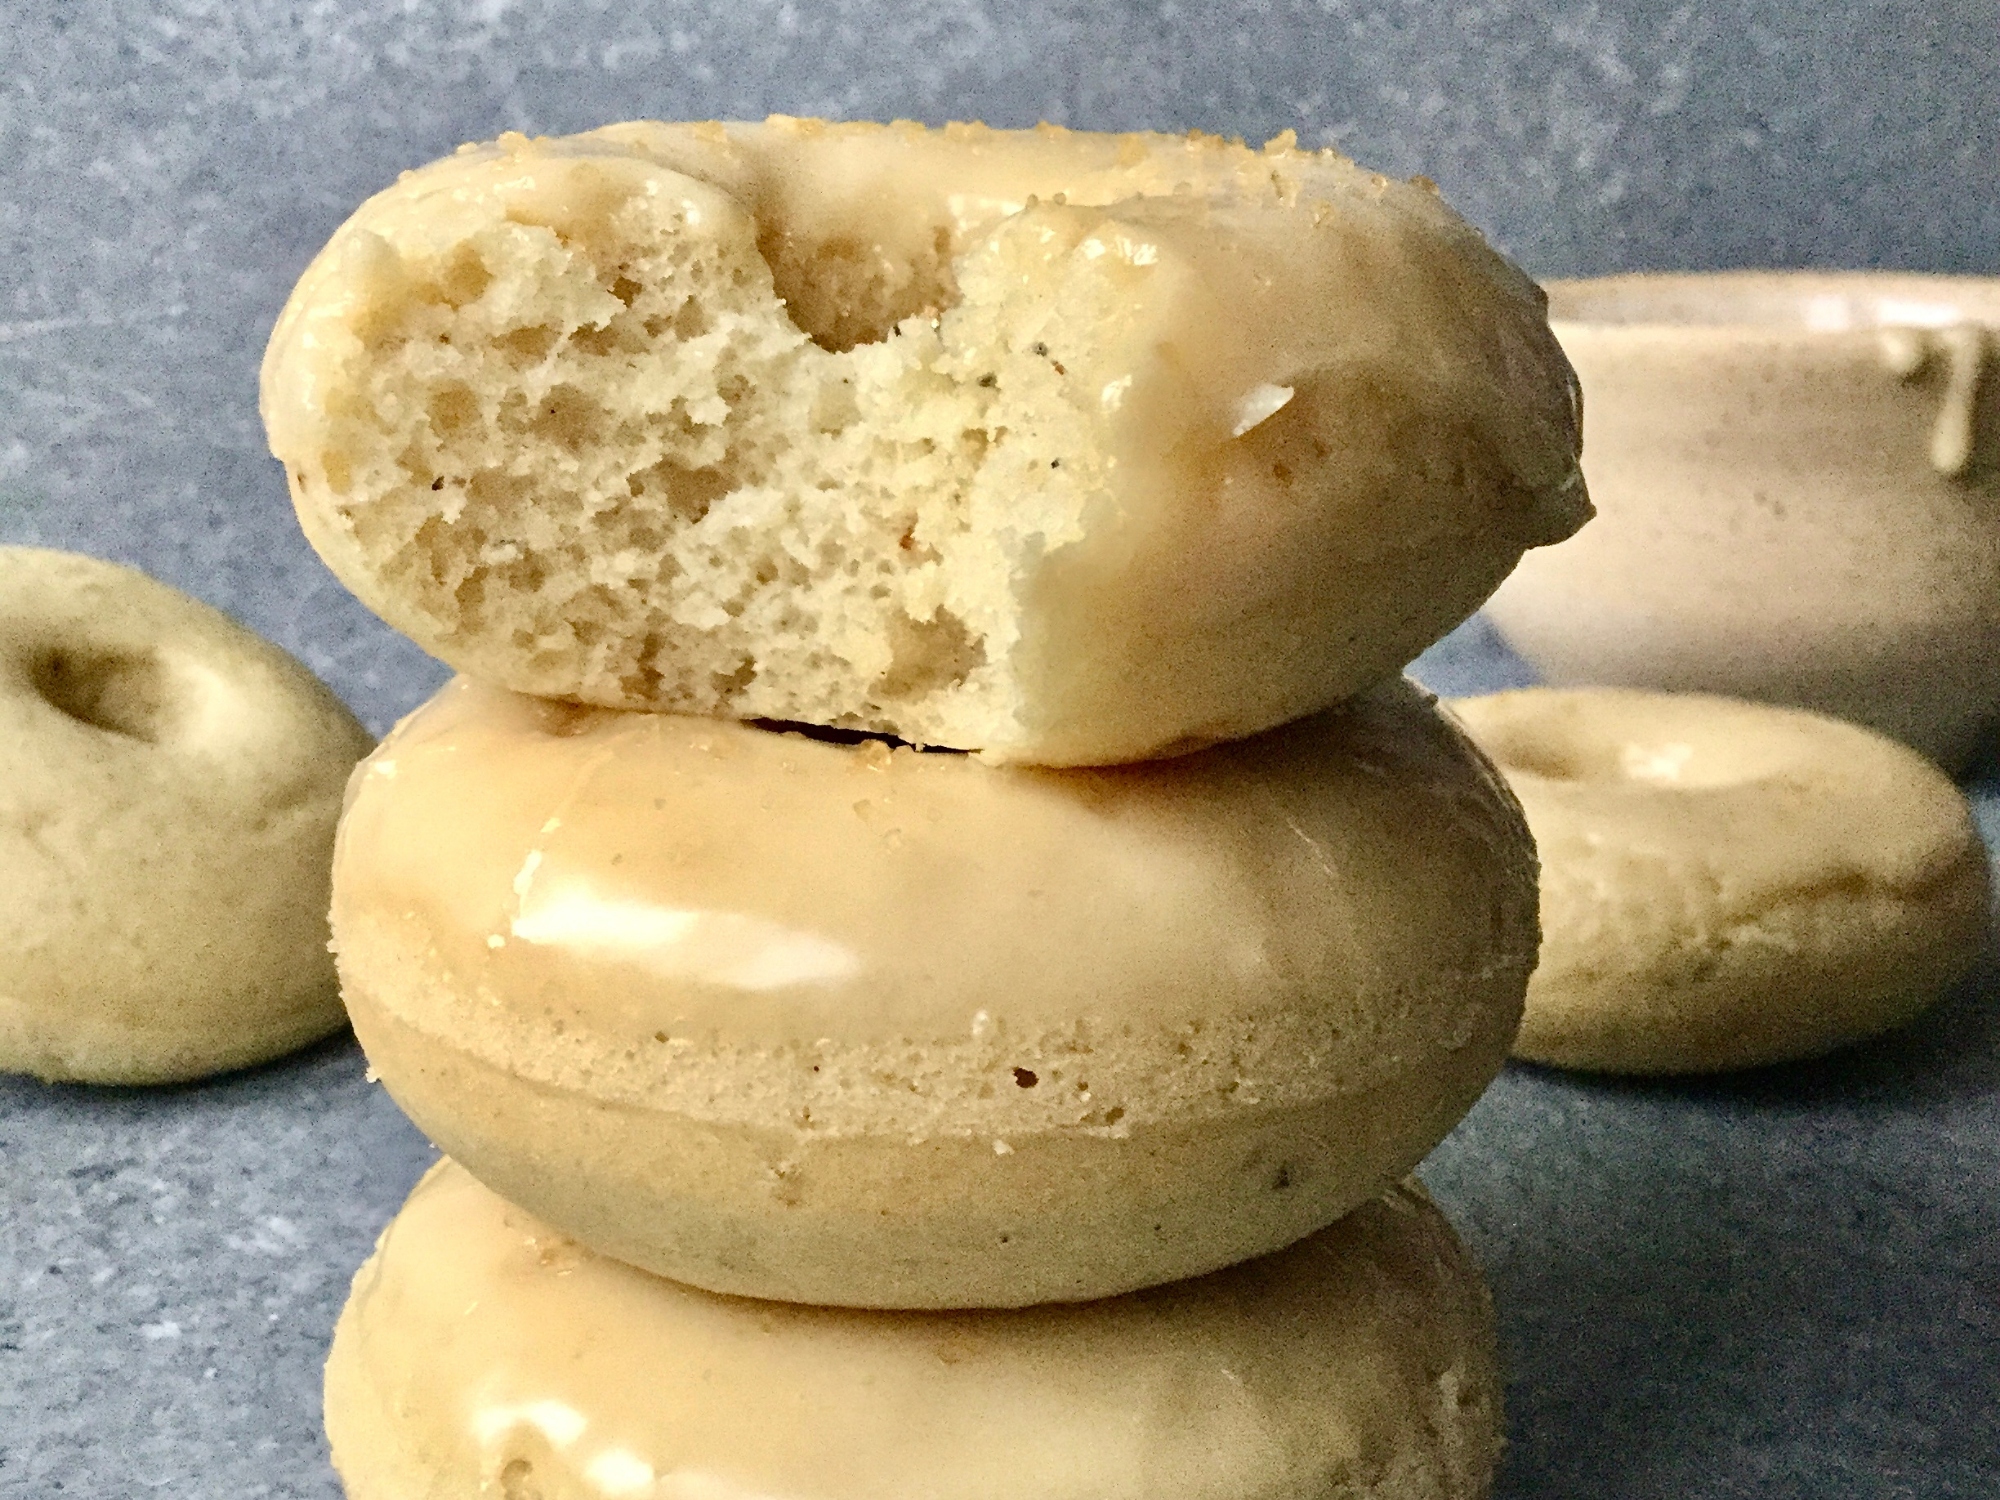 Baked Cardamom Donuts with Maple Glaze (Vegan)